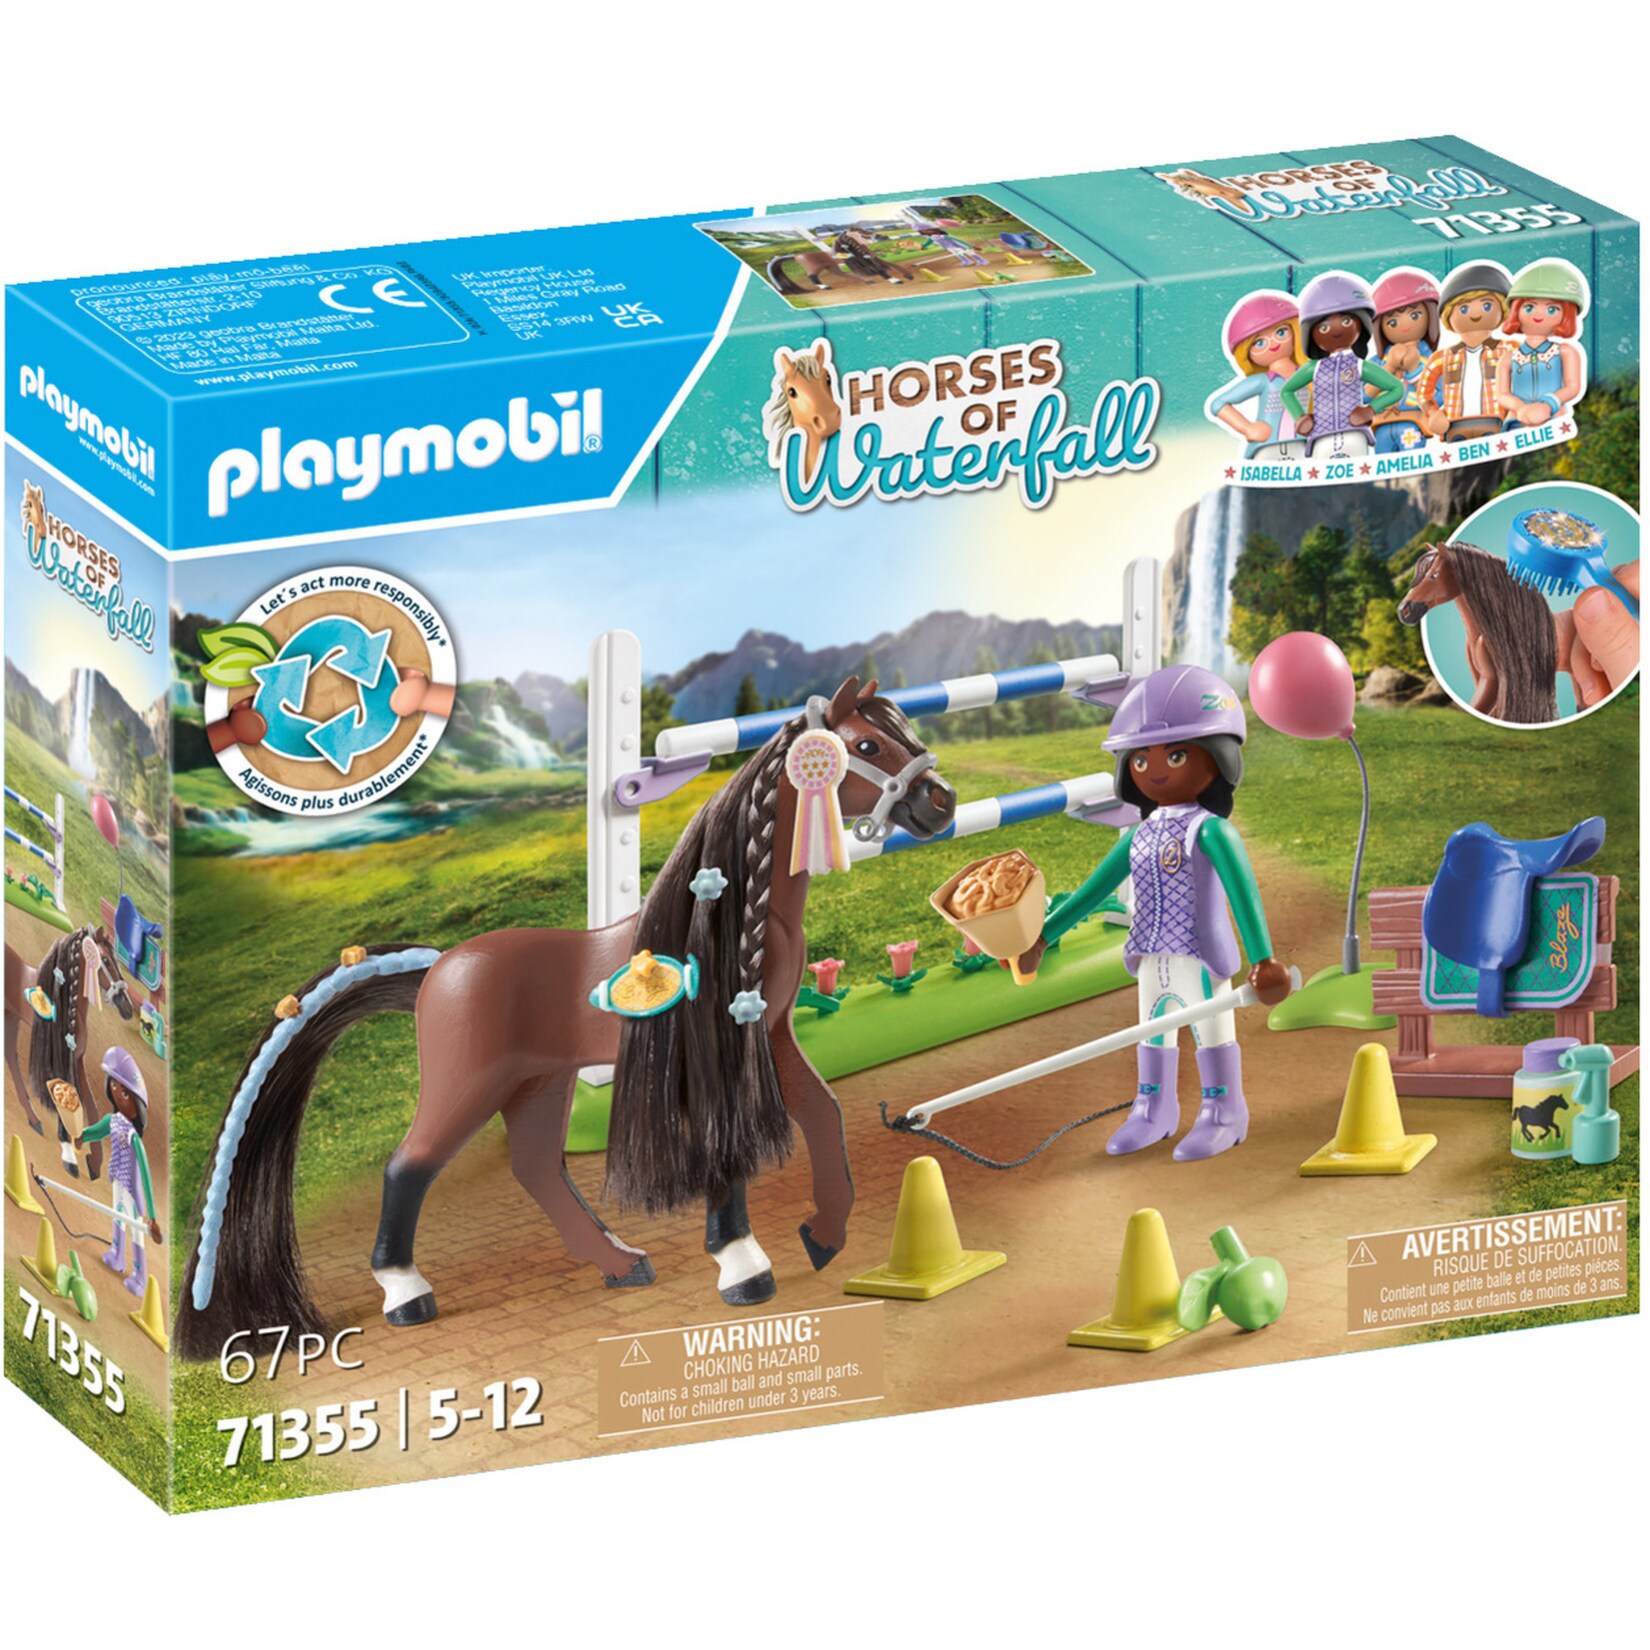 PLAYMOBIL Konstruktionsspielzeug Horses of Waterfall Zoe & Blaze mit Turnierparcours